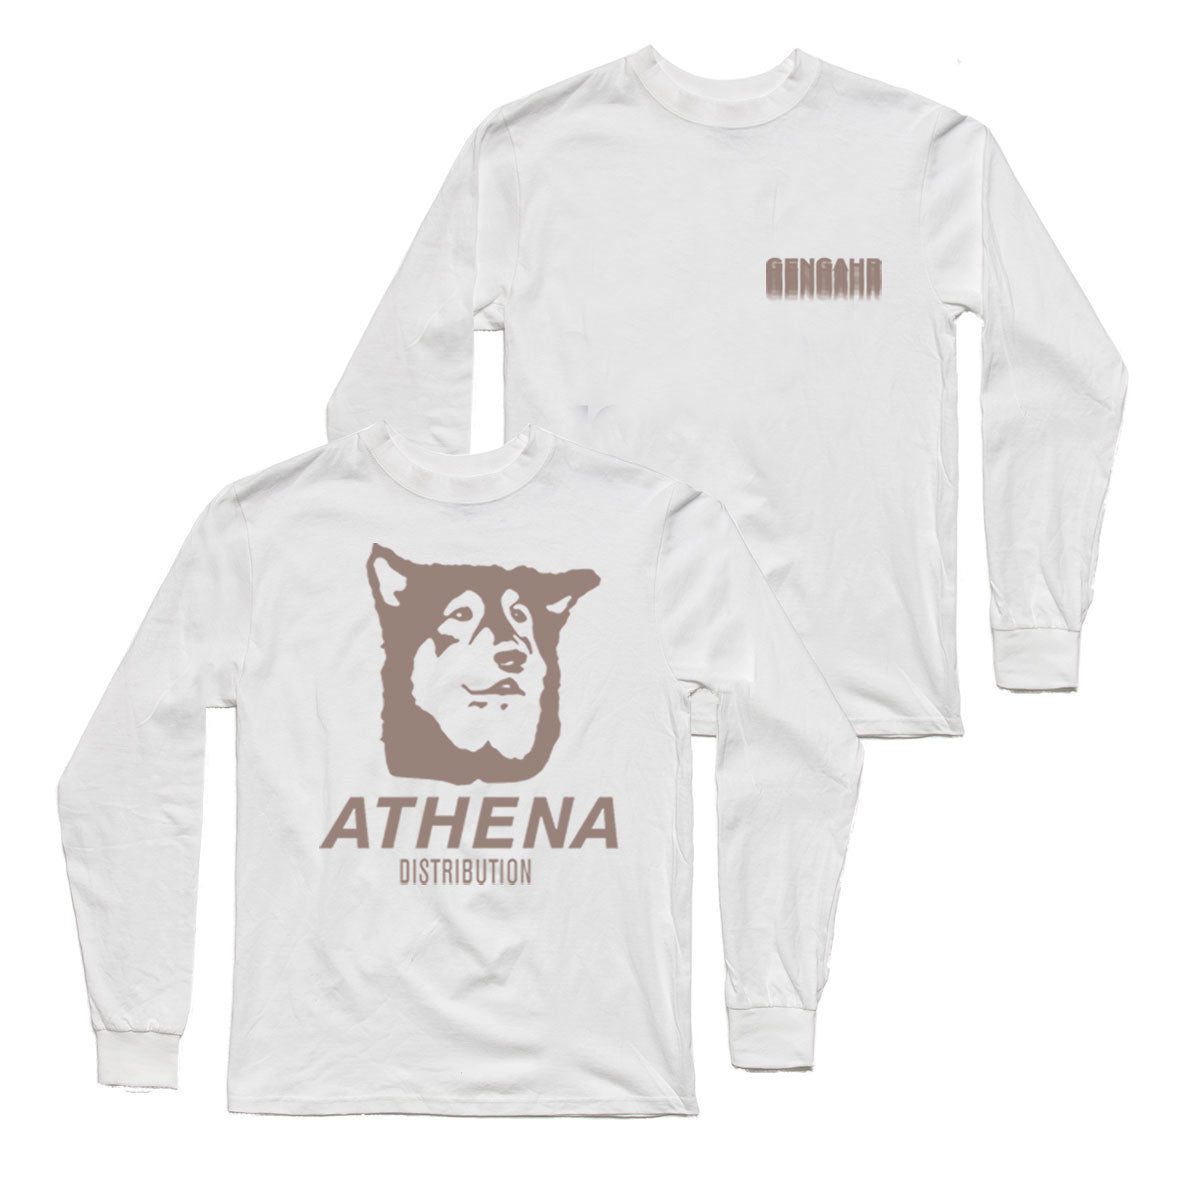 Athena Long Sleeve White Tee